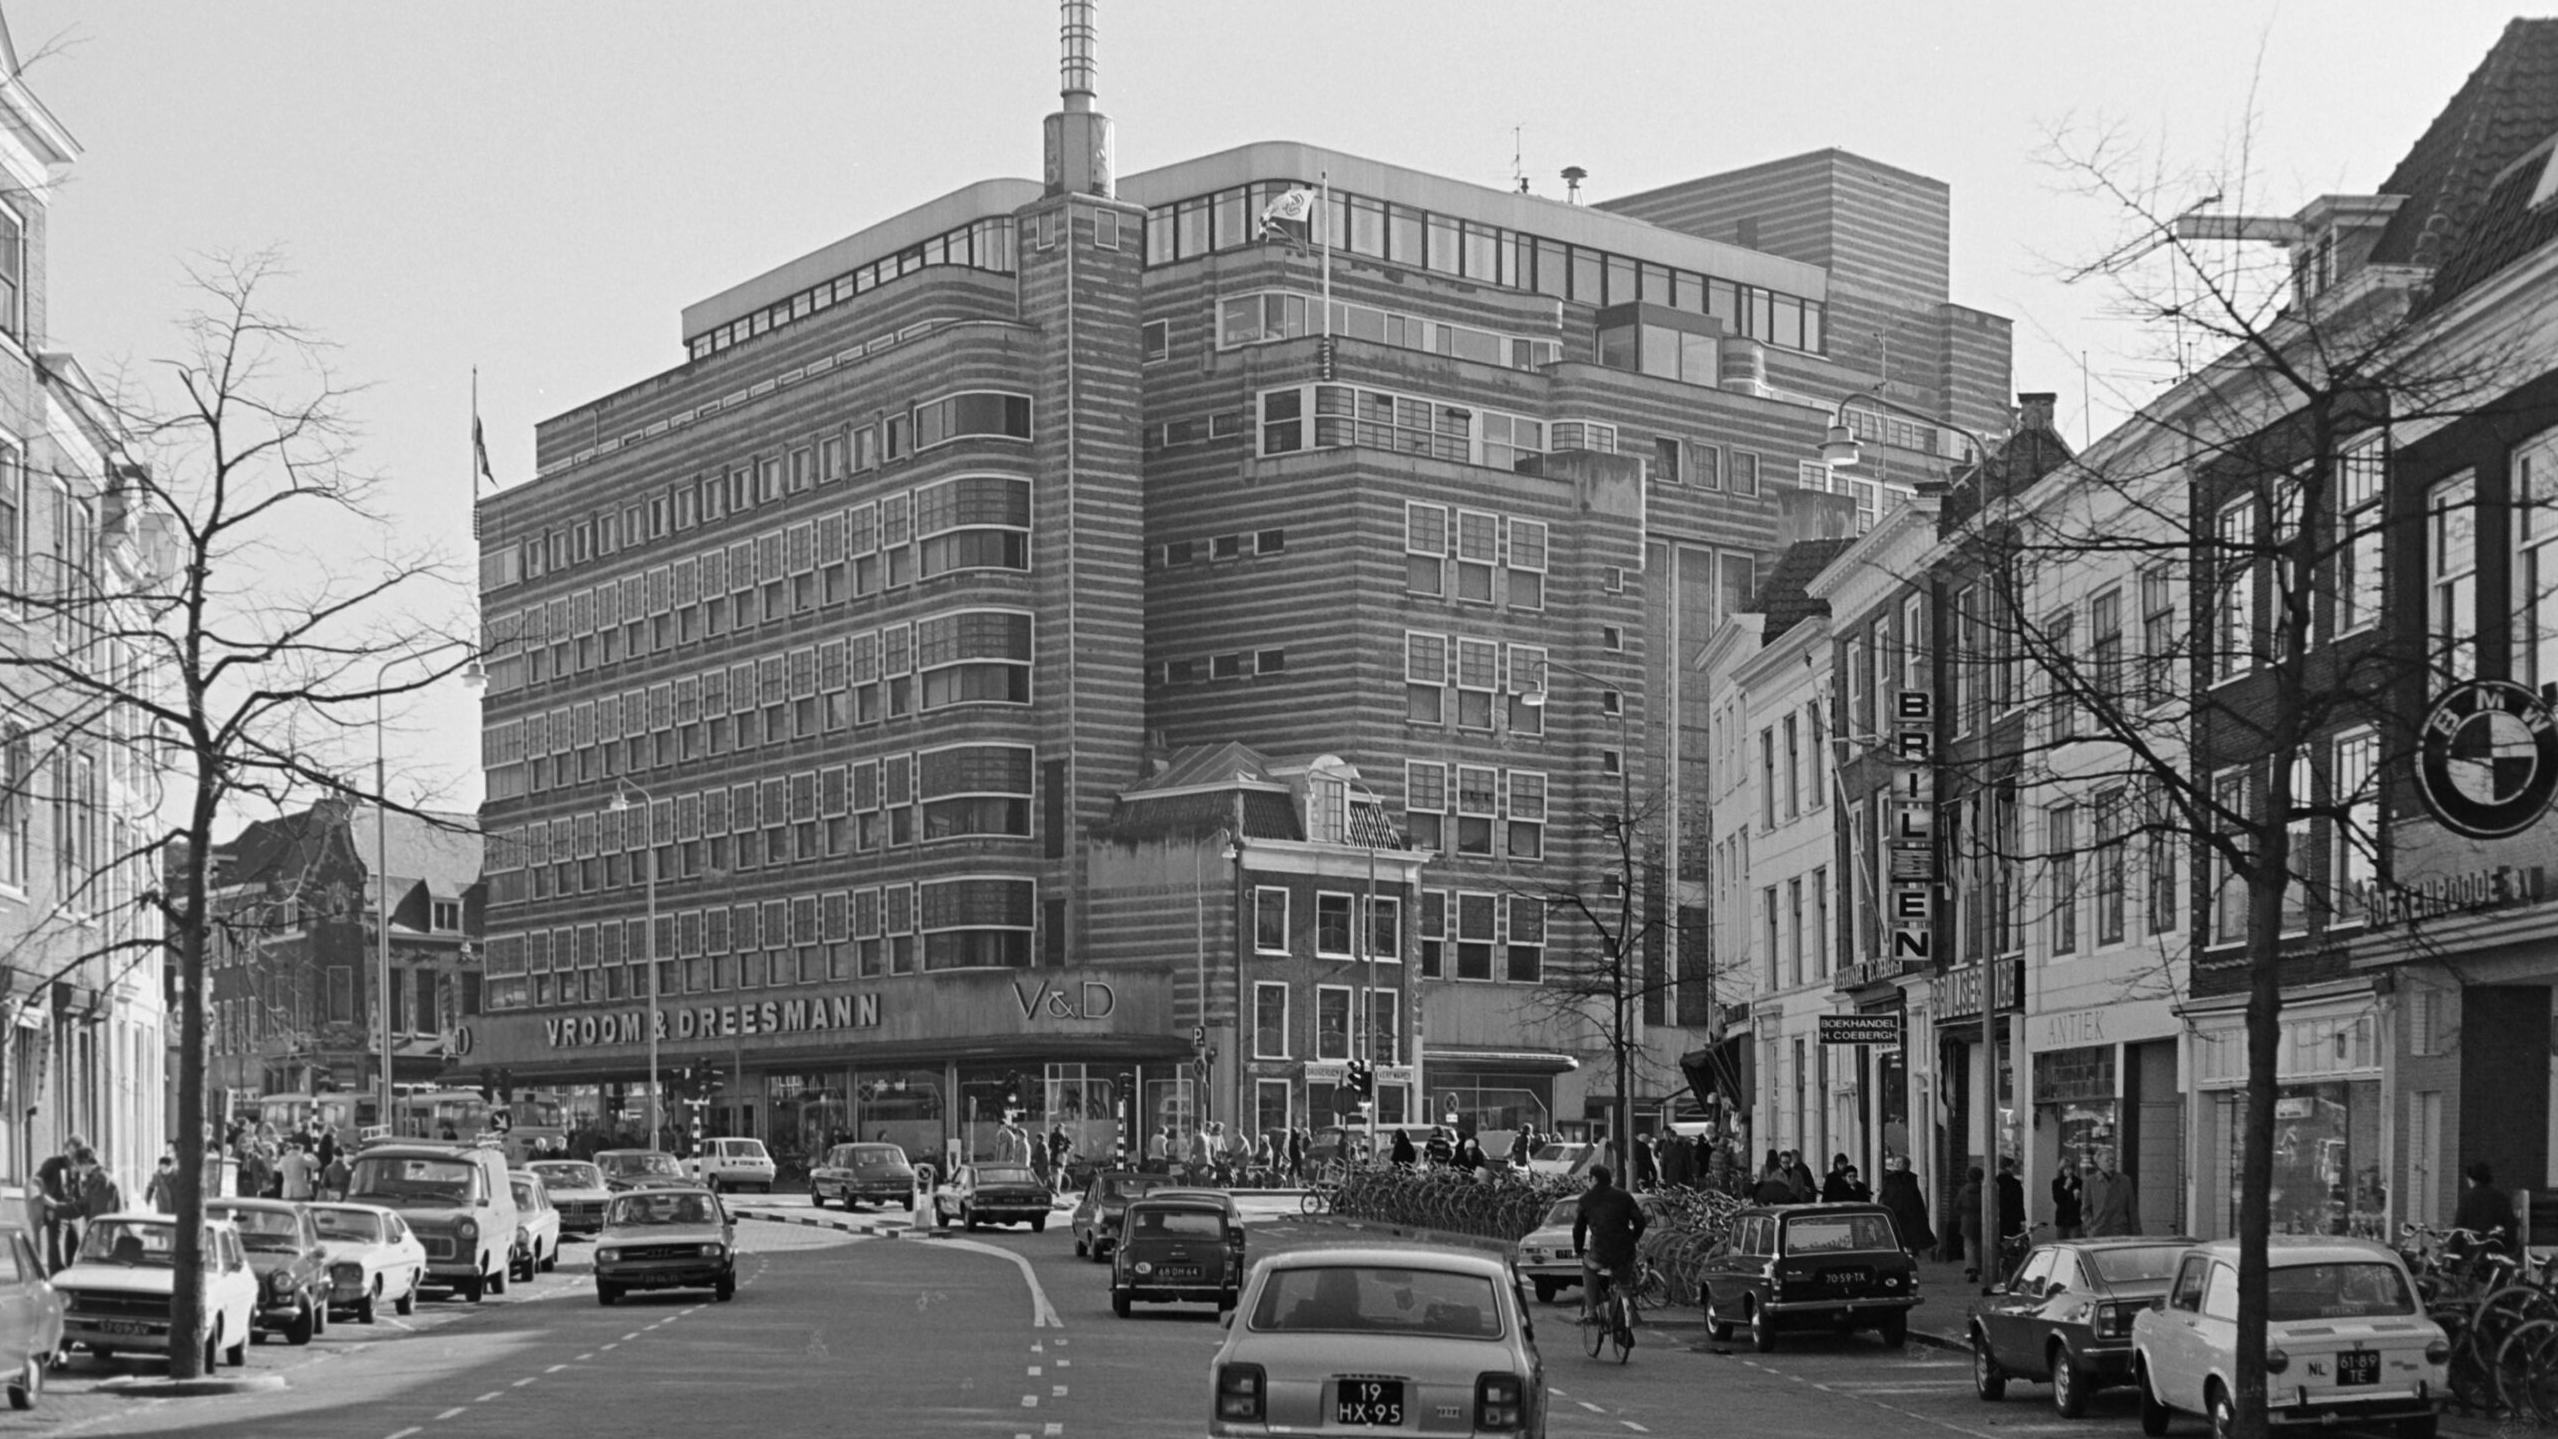 V&D-Haarlem uit 1934, hier in 1976. Foto Noord-Hollands Archief